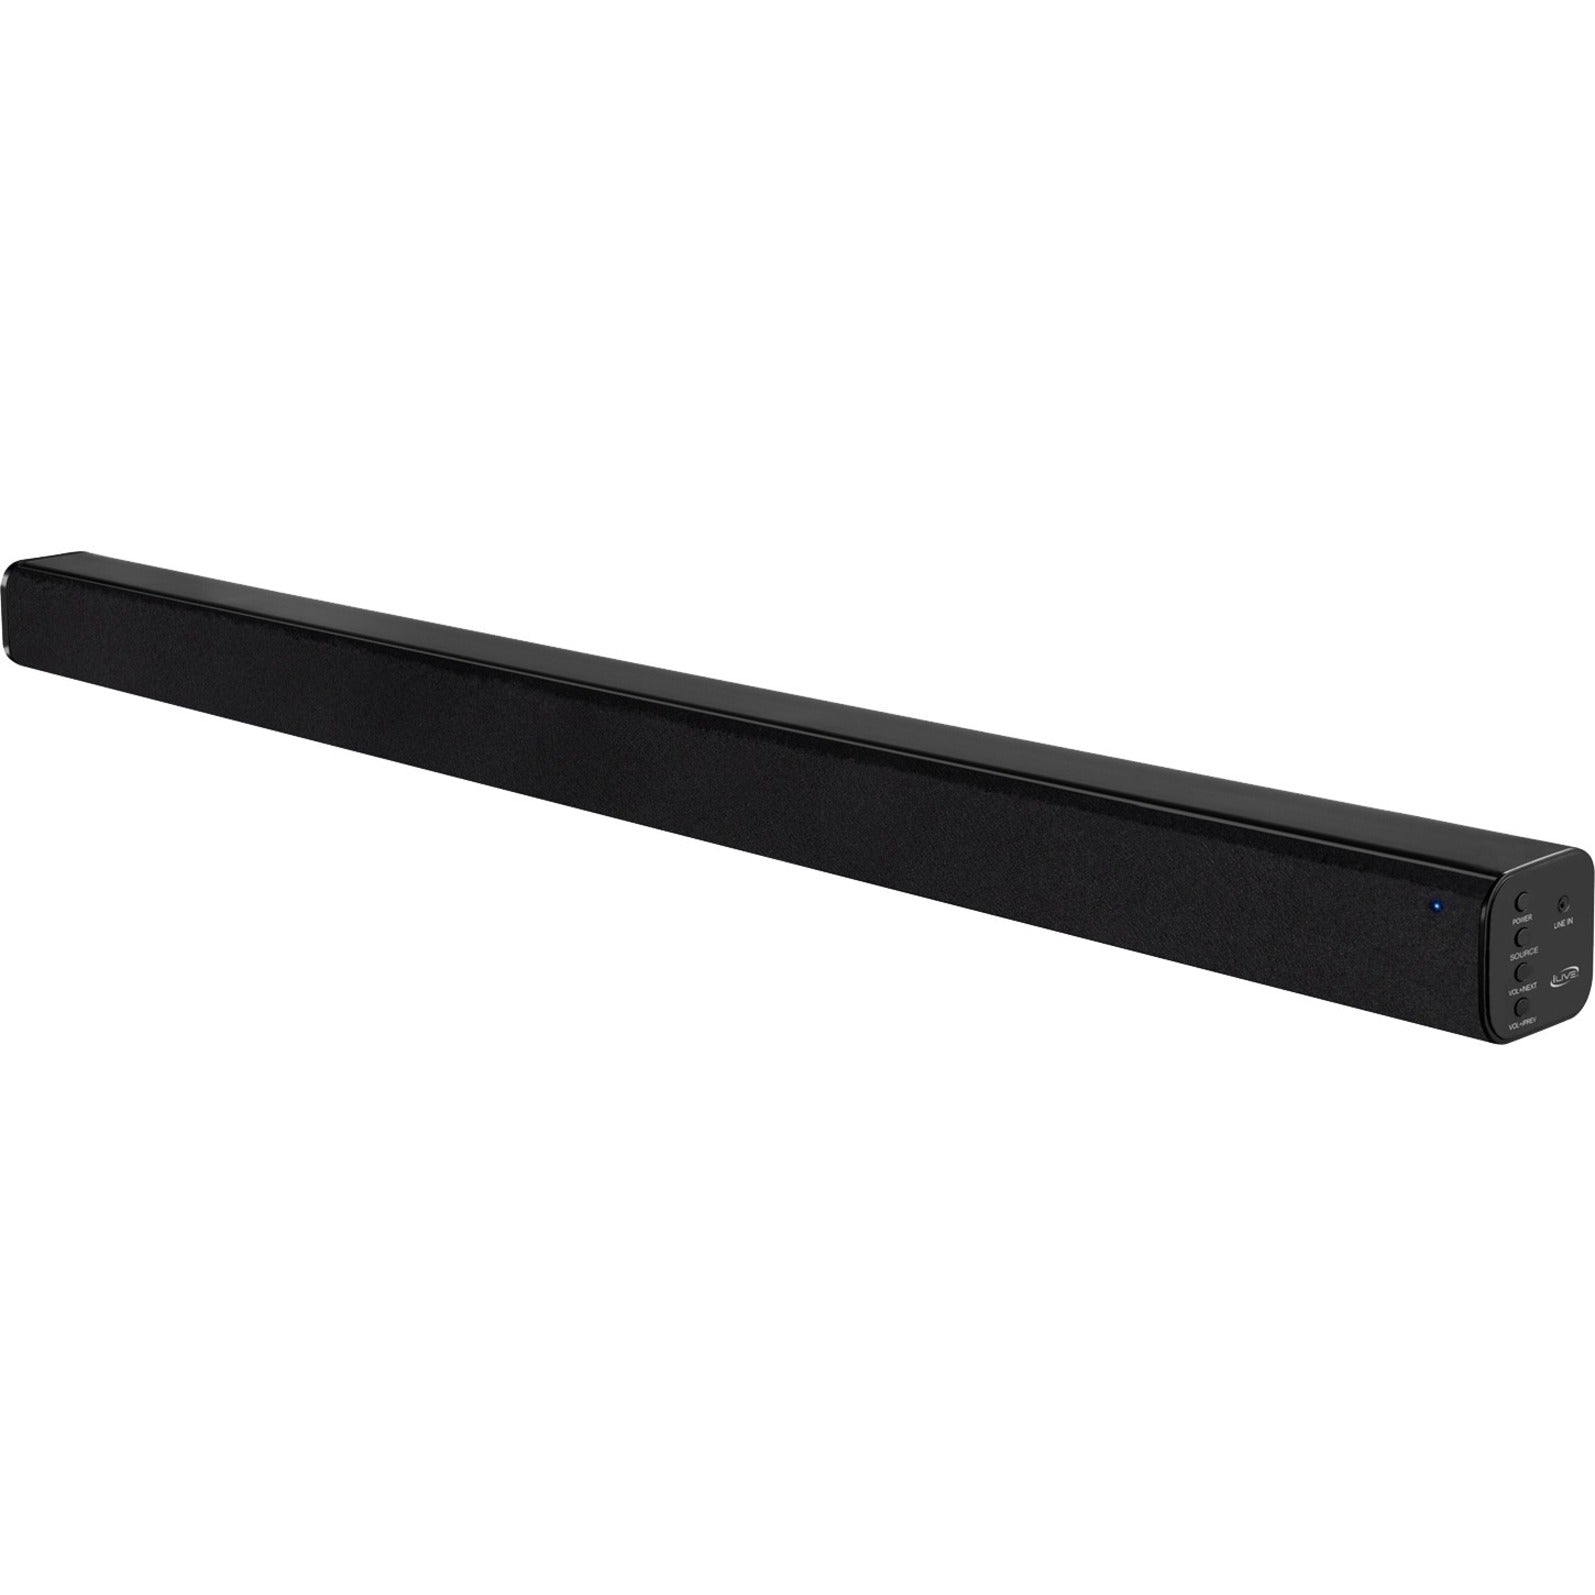 iLive ITB066B 32" HD Sound Bar with Bluetooth, Wall Mountable